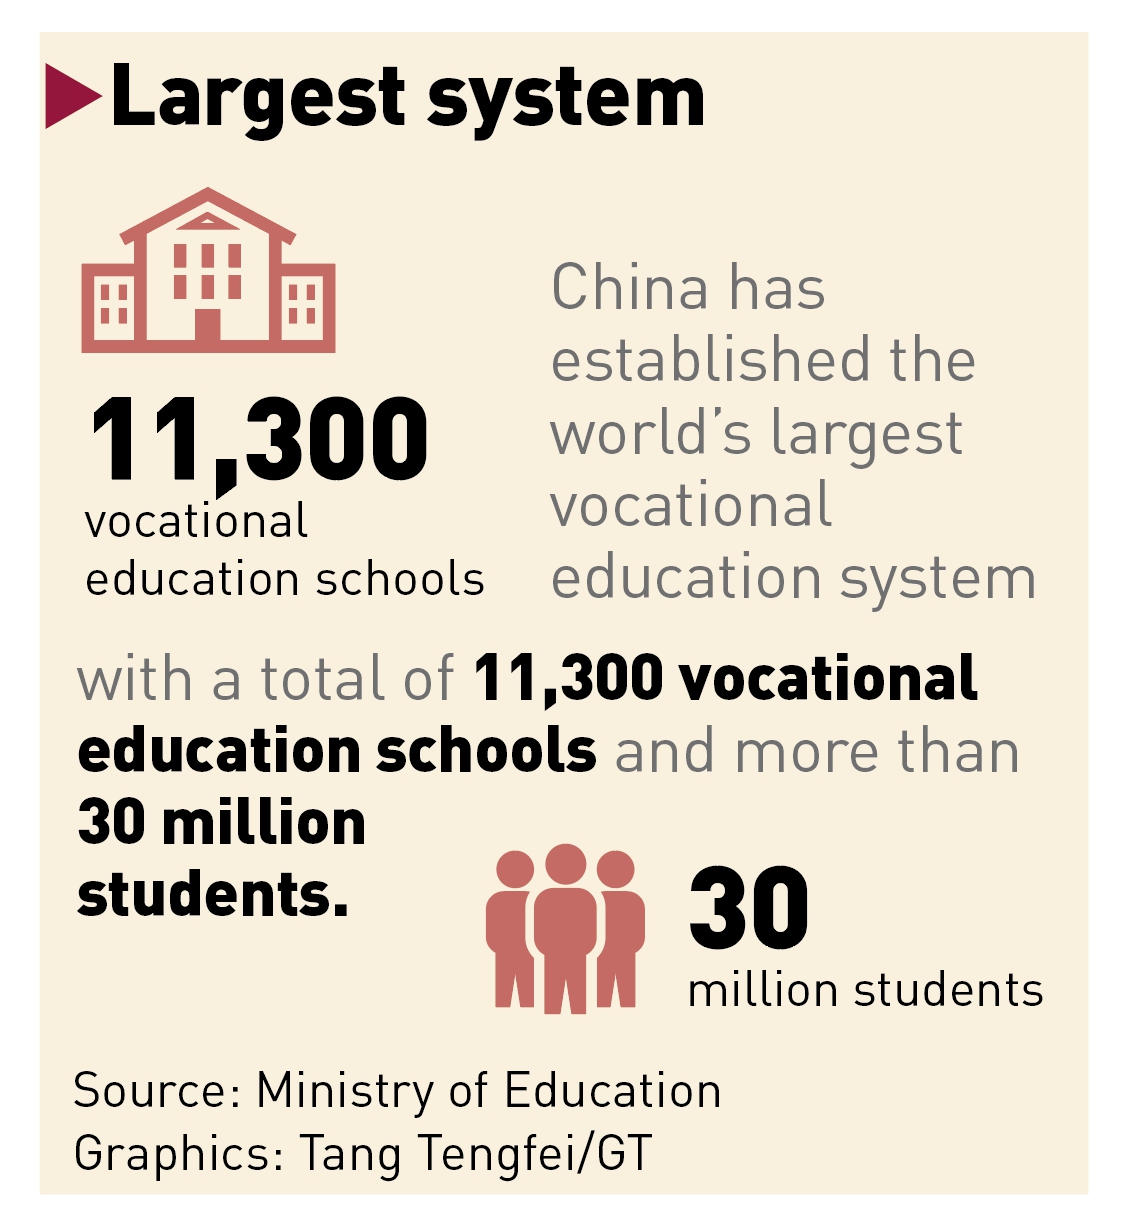 China has established the world's largest vocational education system